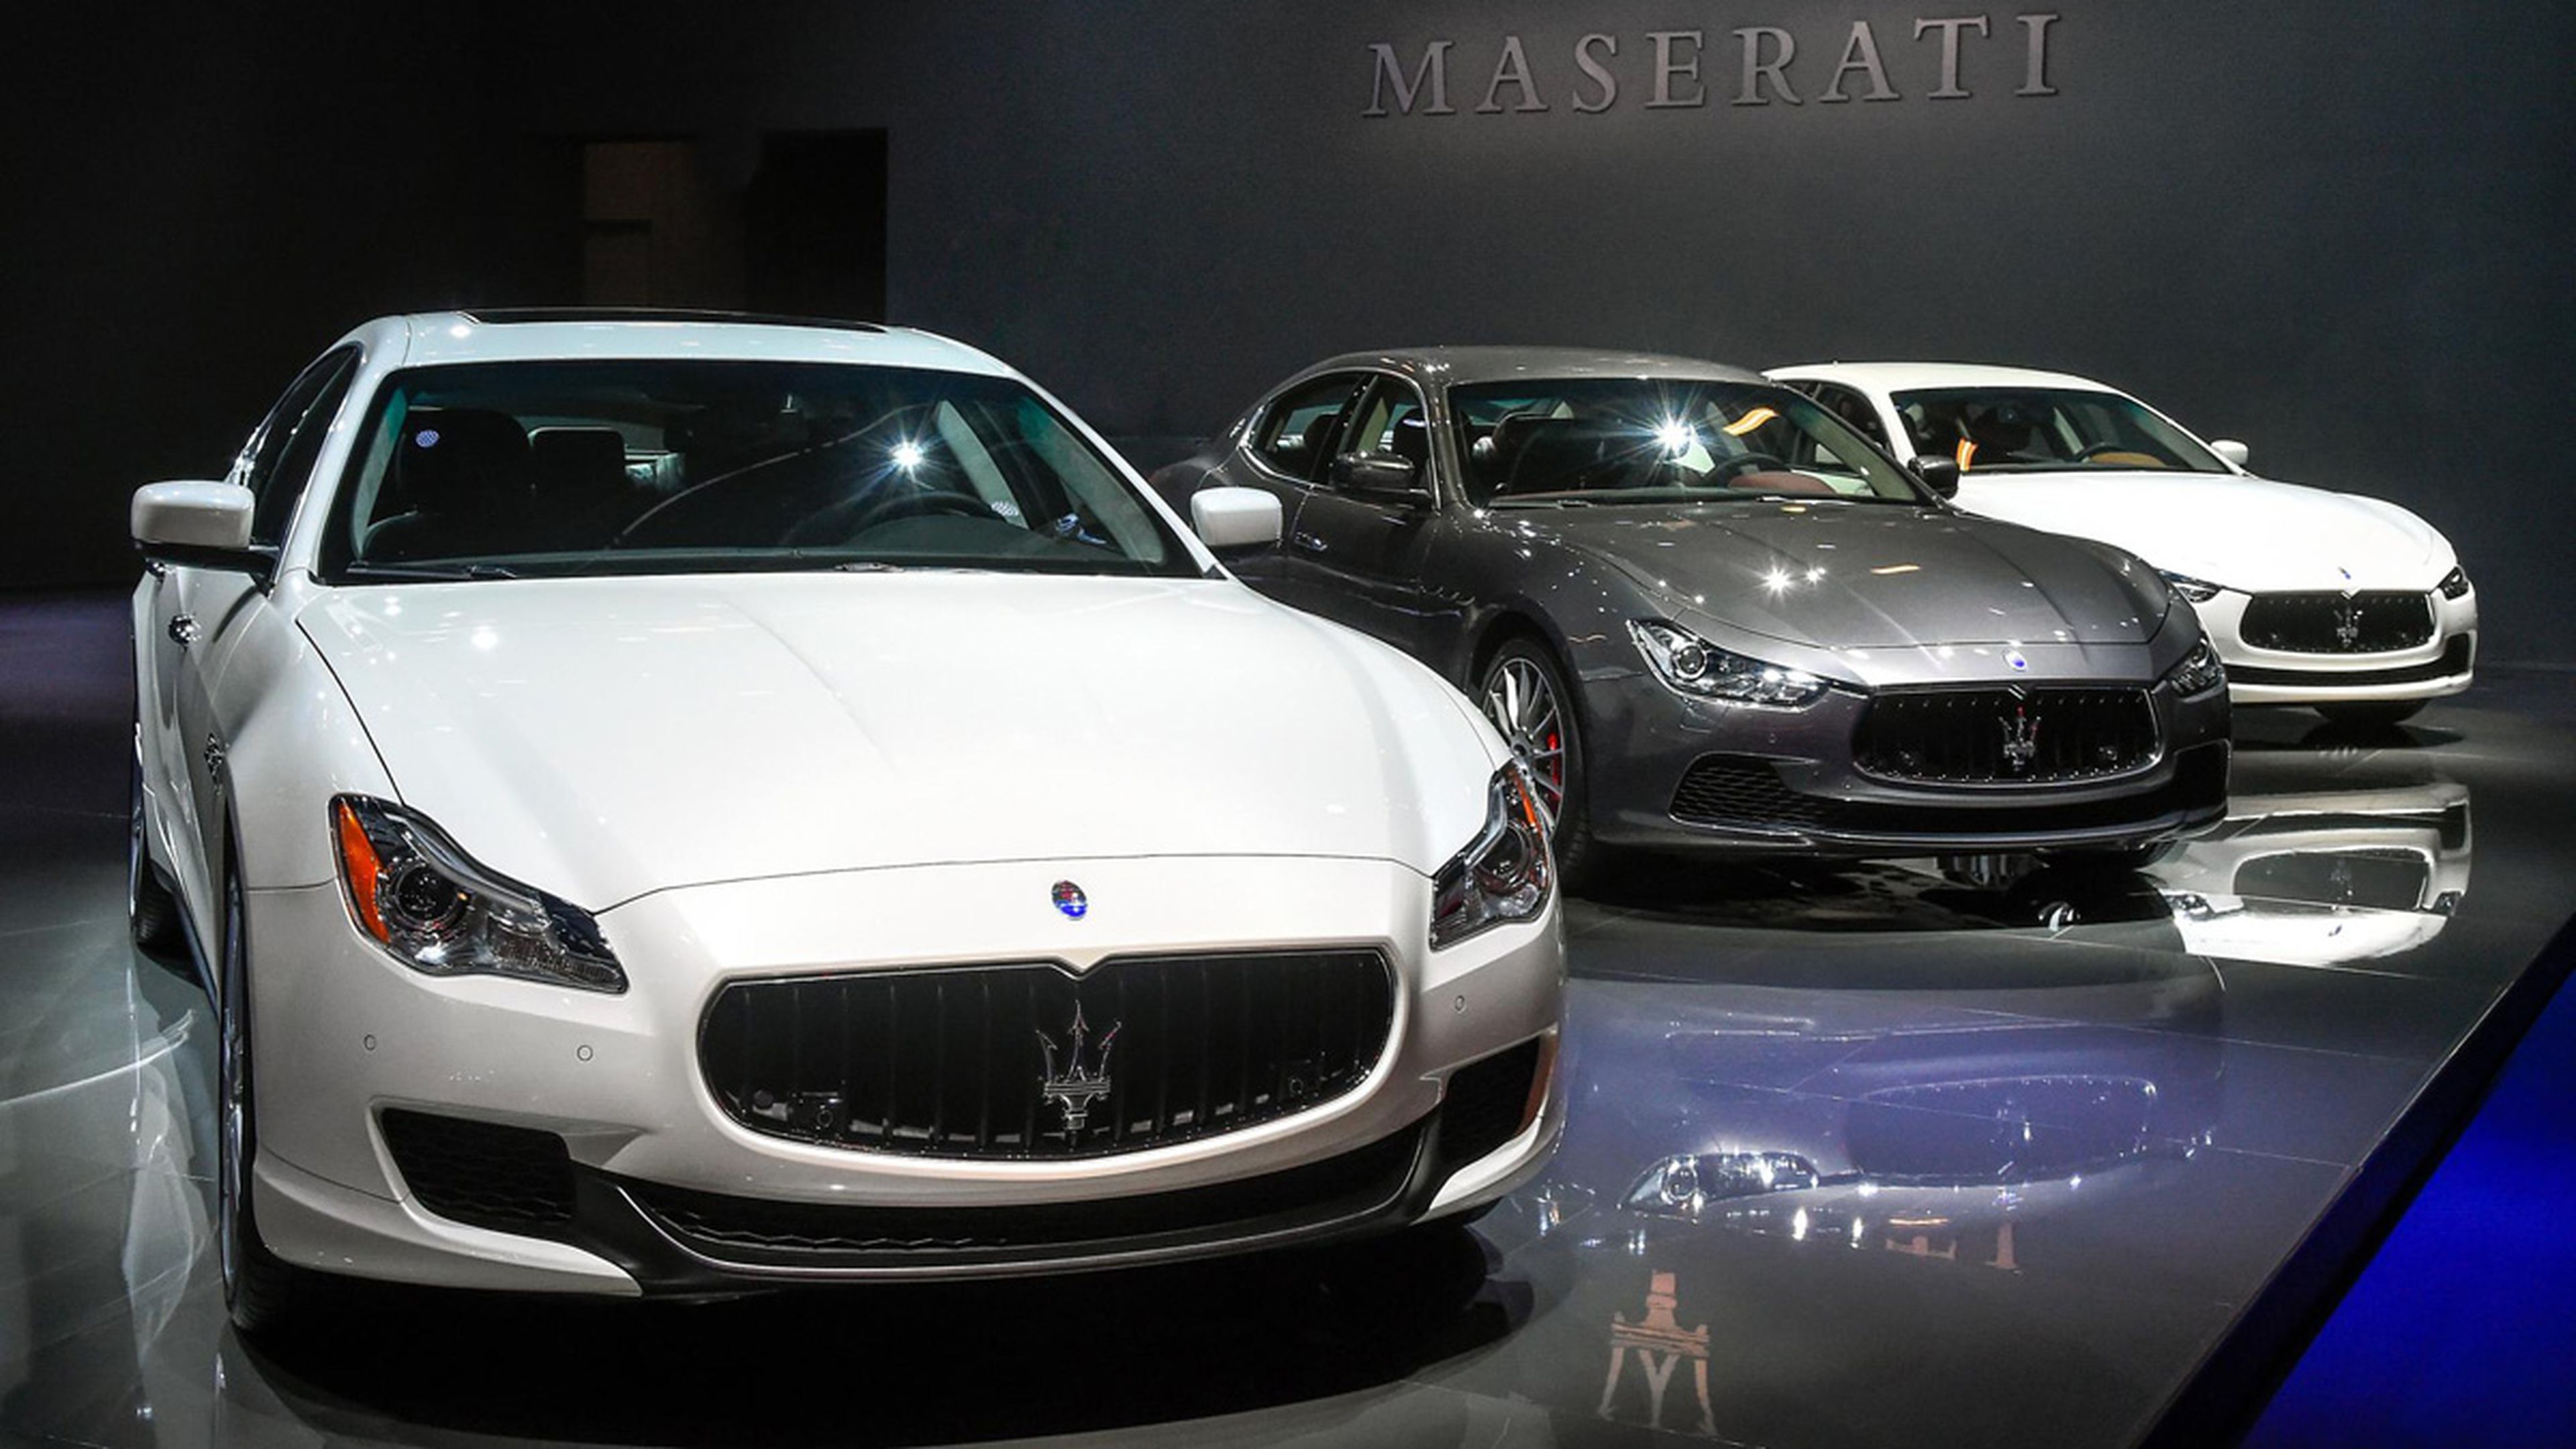 Maserati Quattroporte Salon Frankfurt 2015